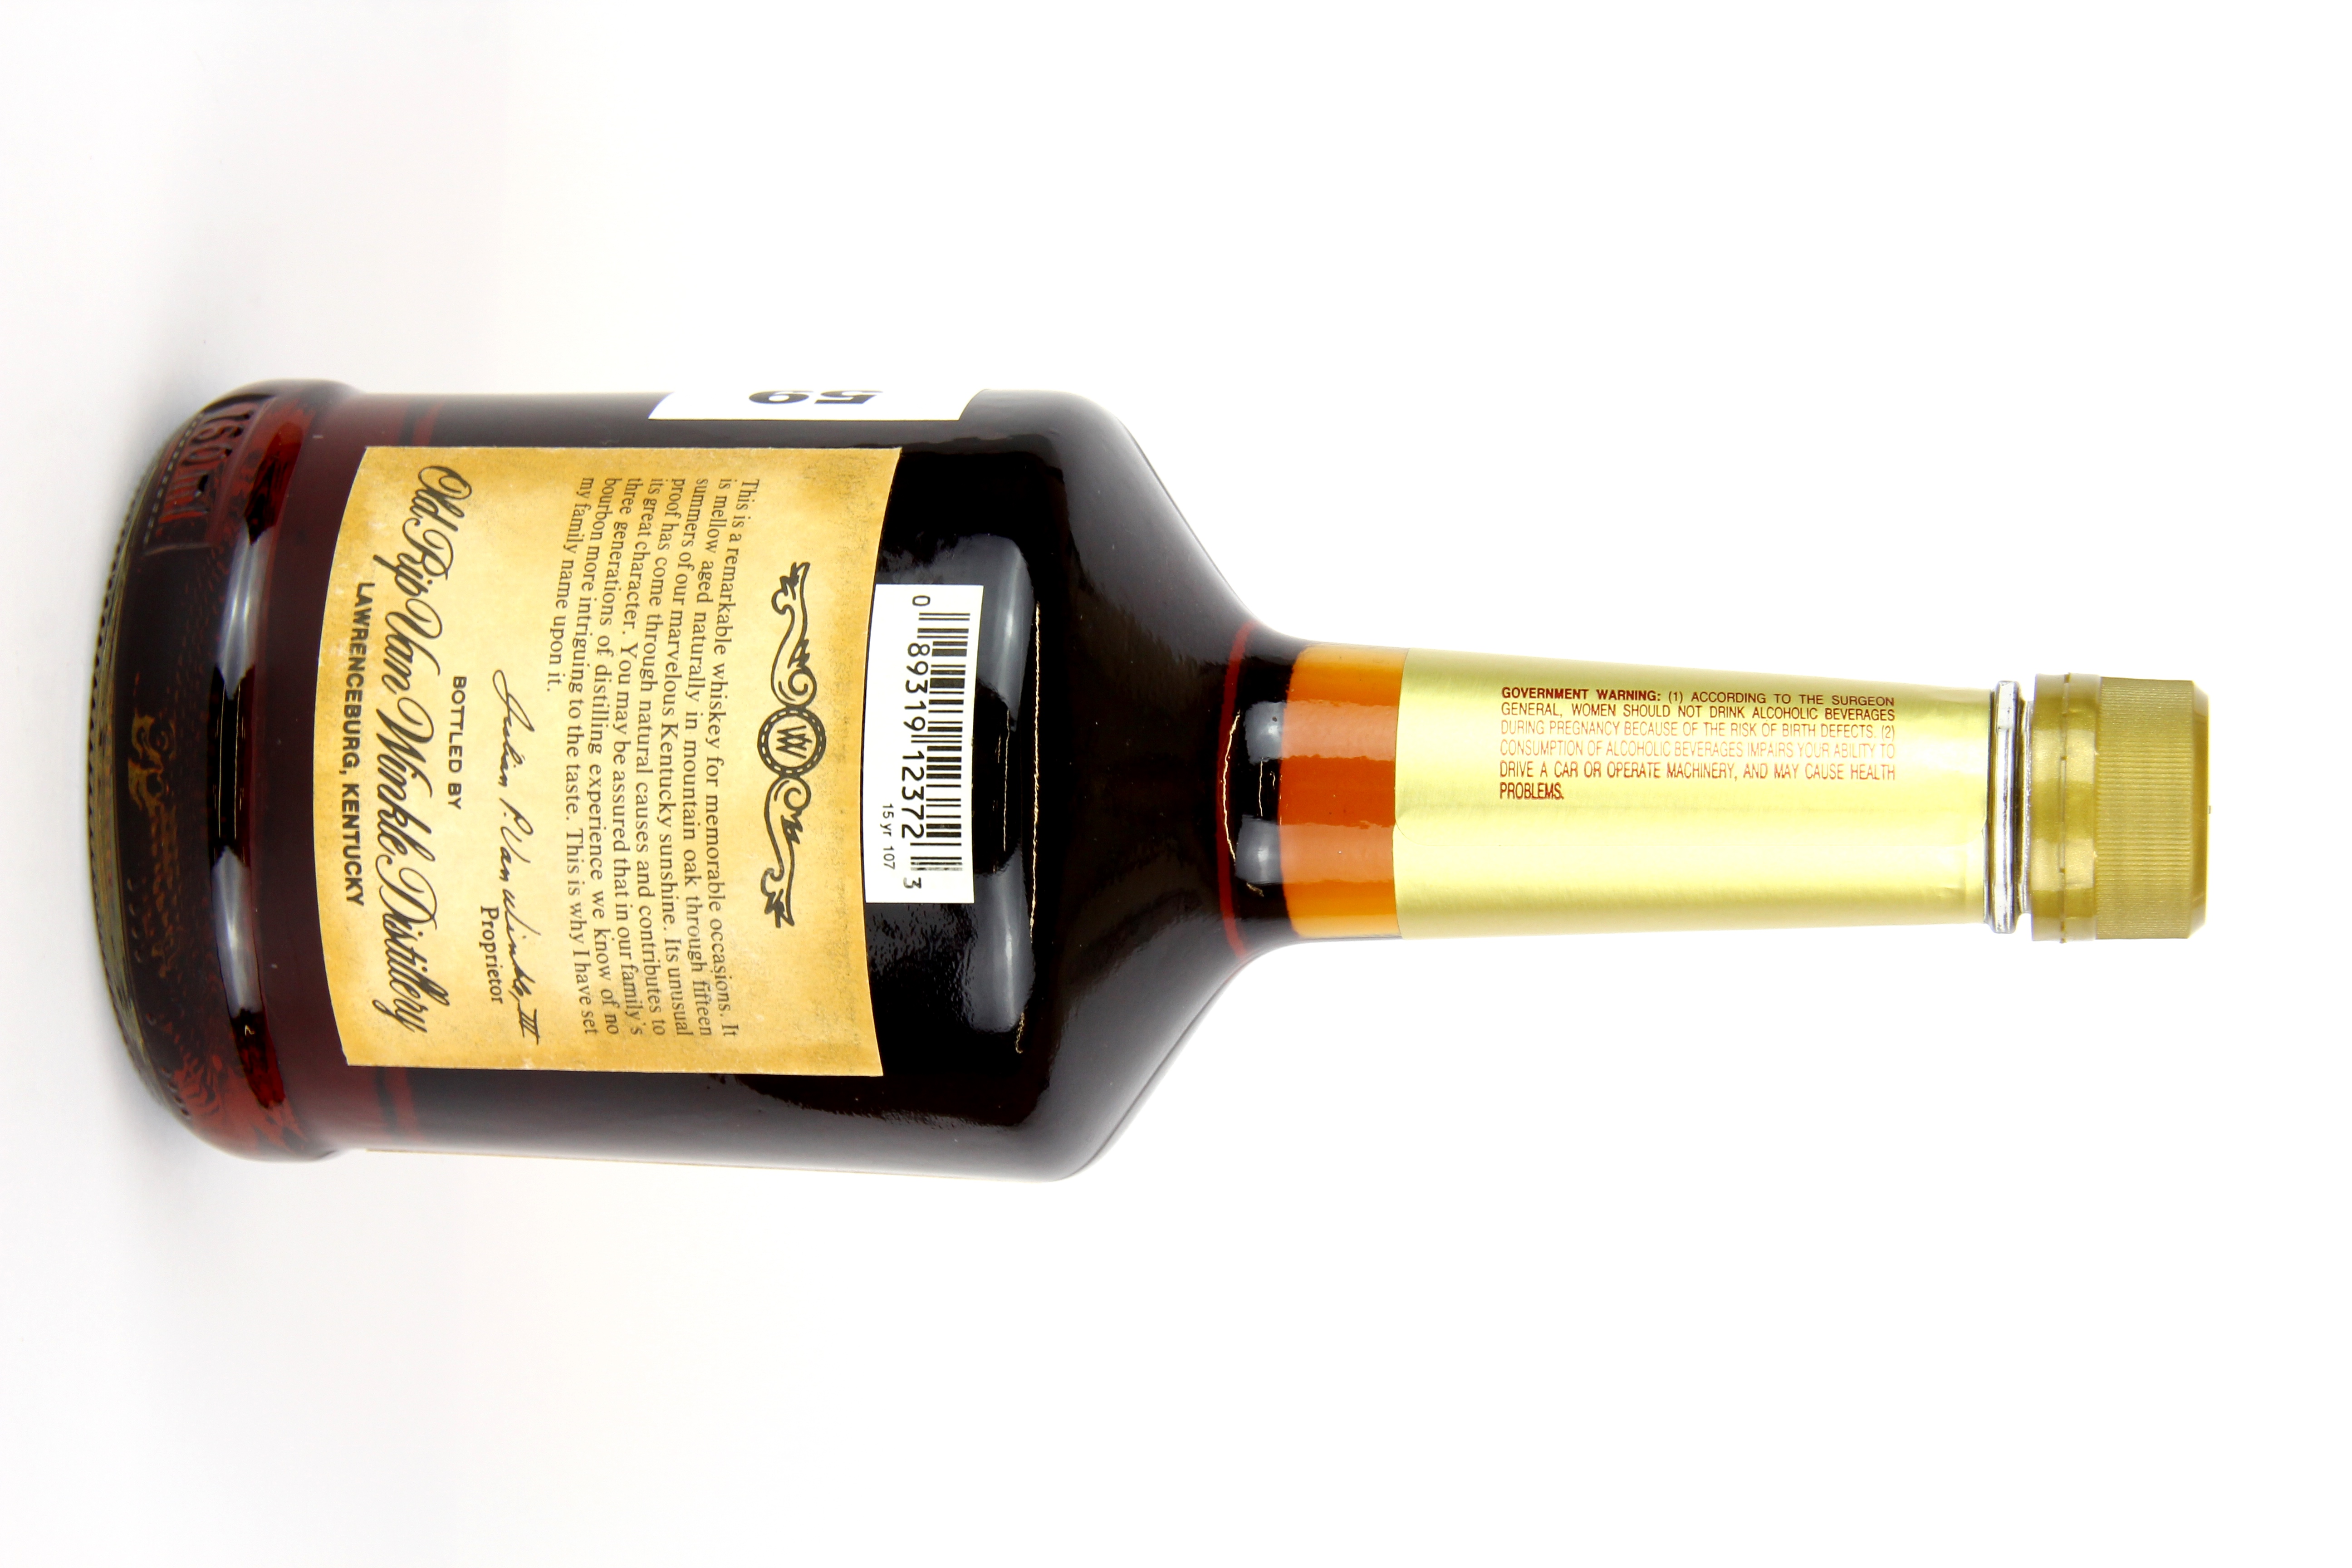 A bottle of 107 proof Old Rip Van Winkle handmade bourbon, no. K9728. - Image 2 of 2